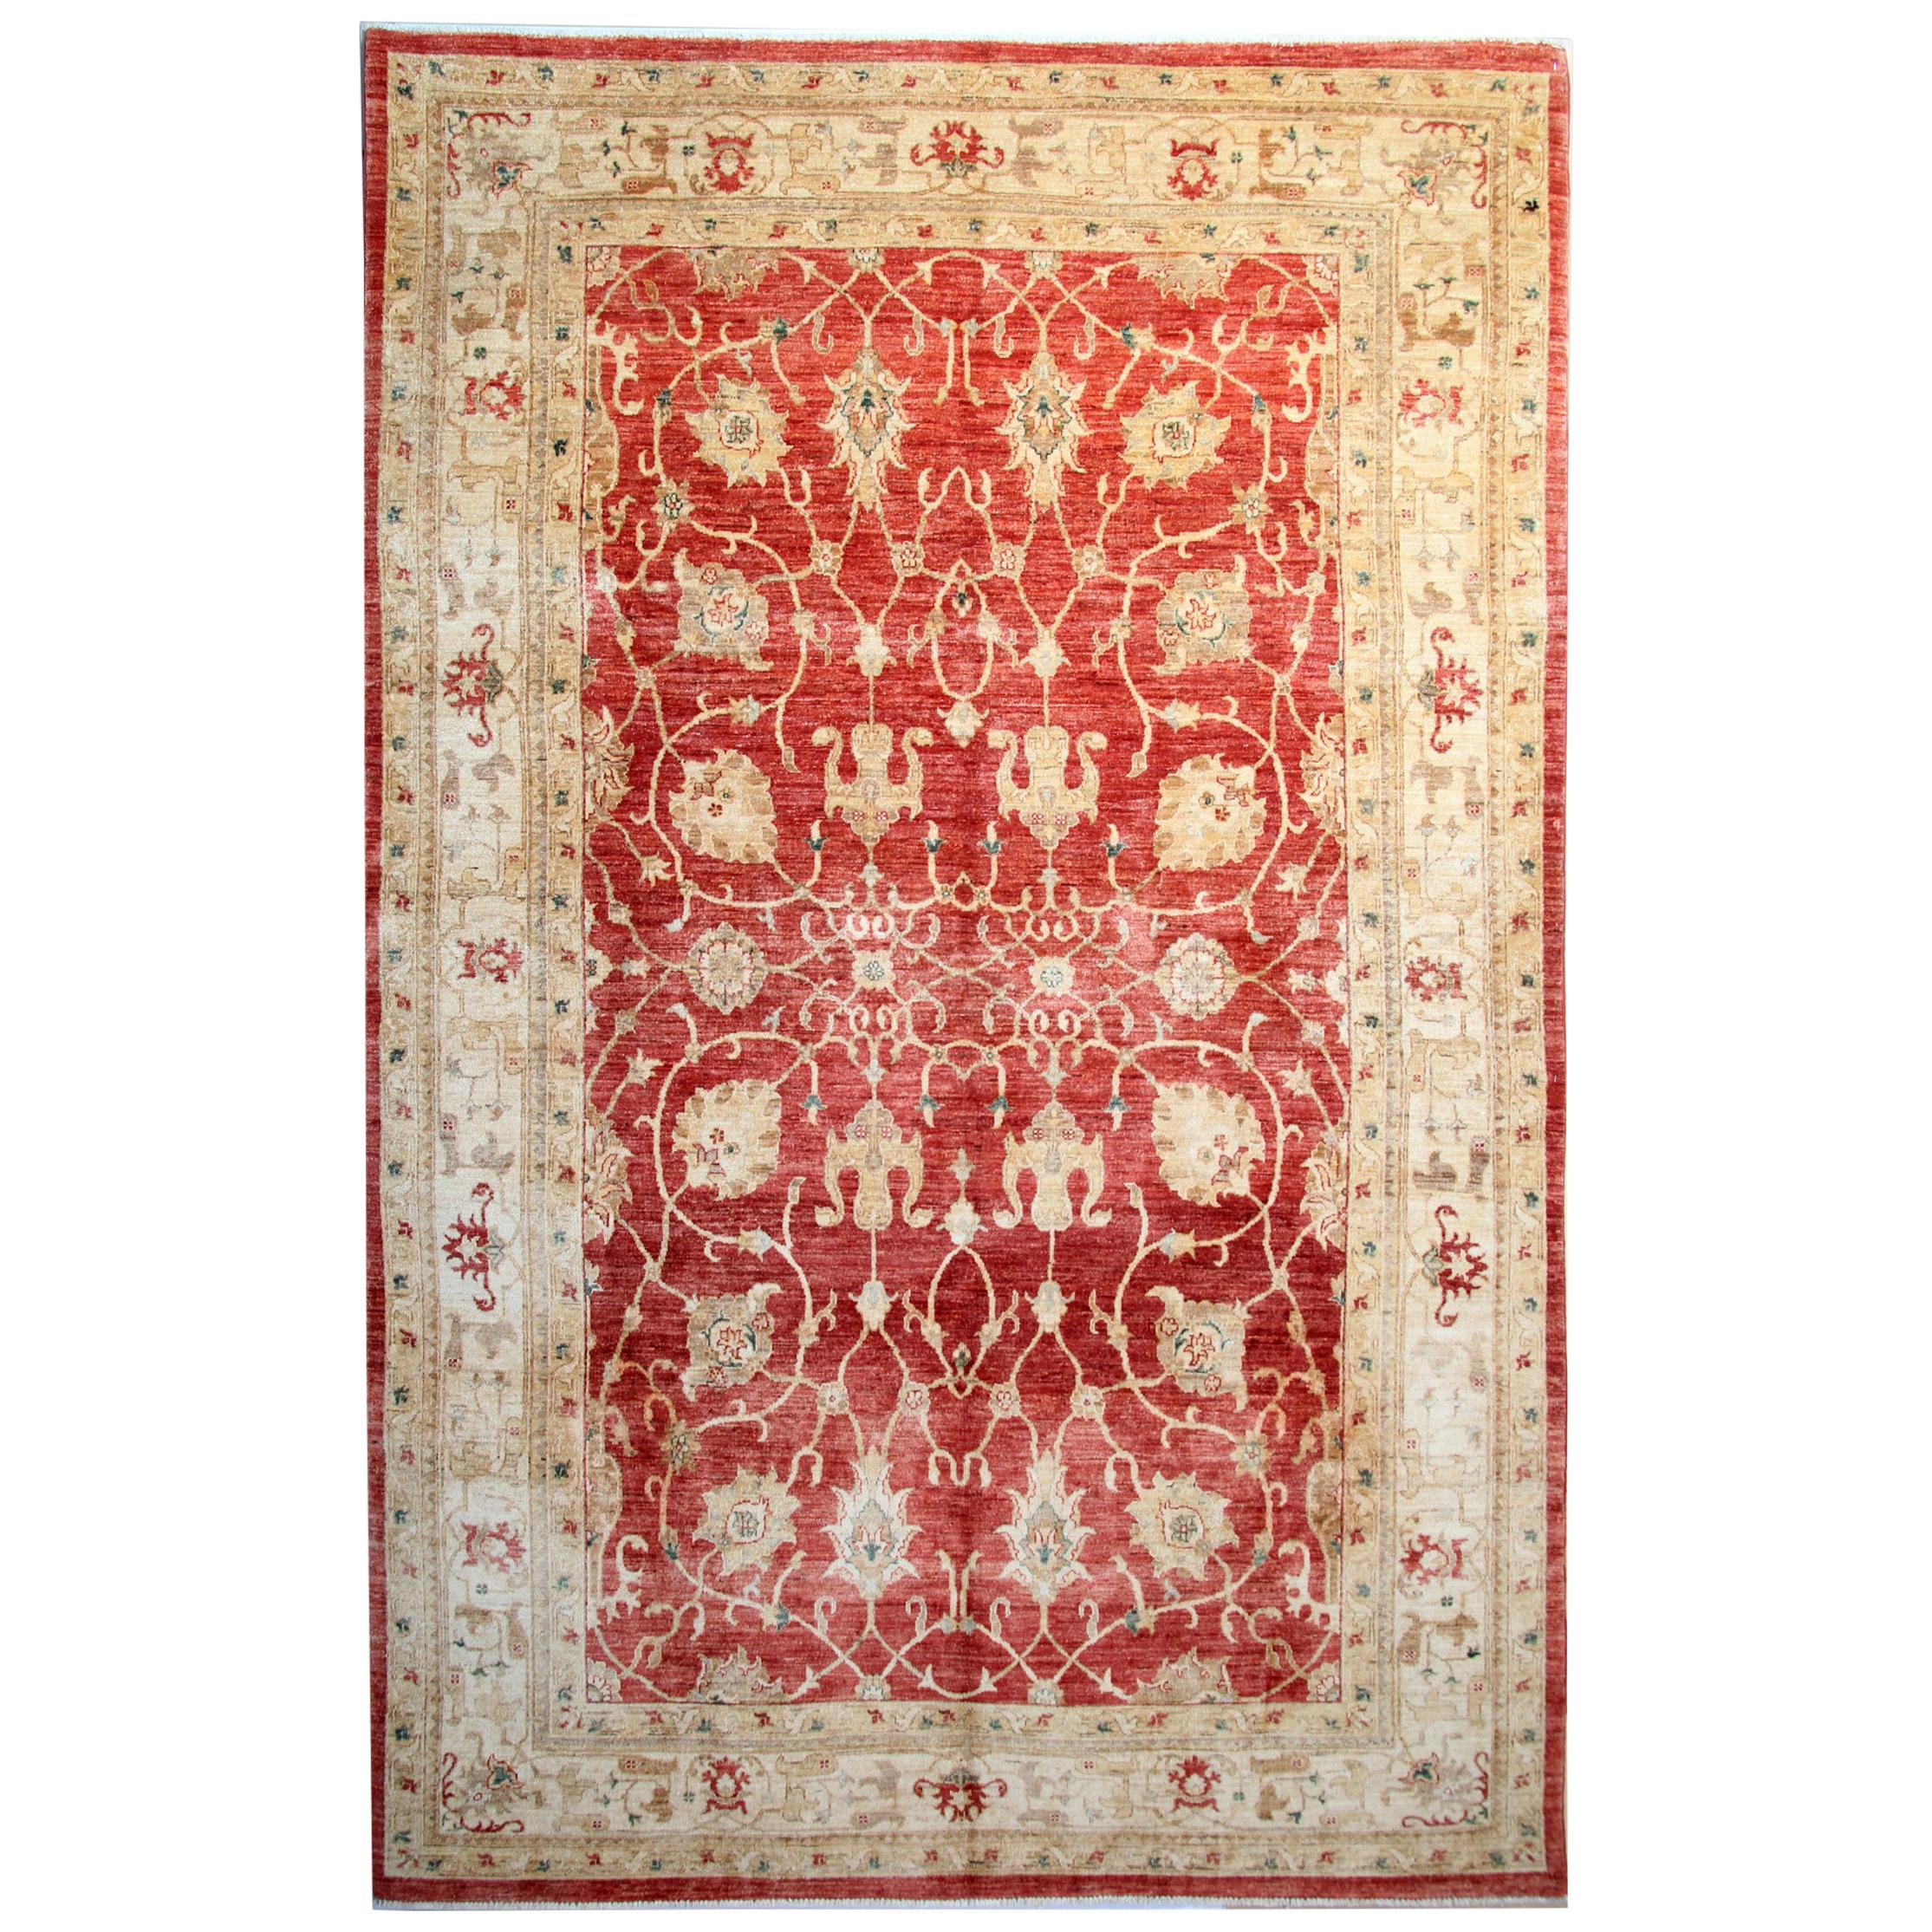 Handmade Oriental Carpet, Traditional Area Rug